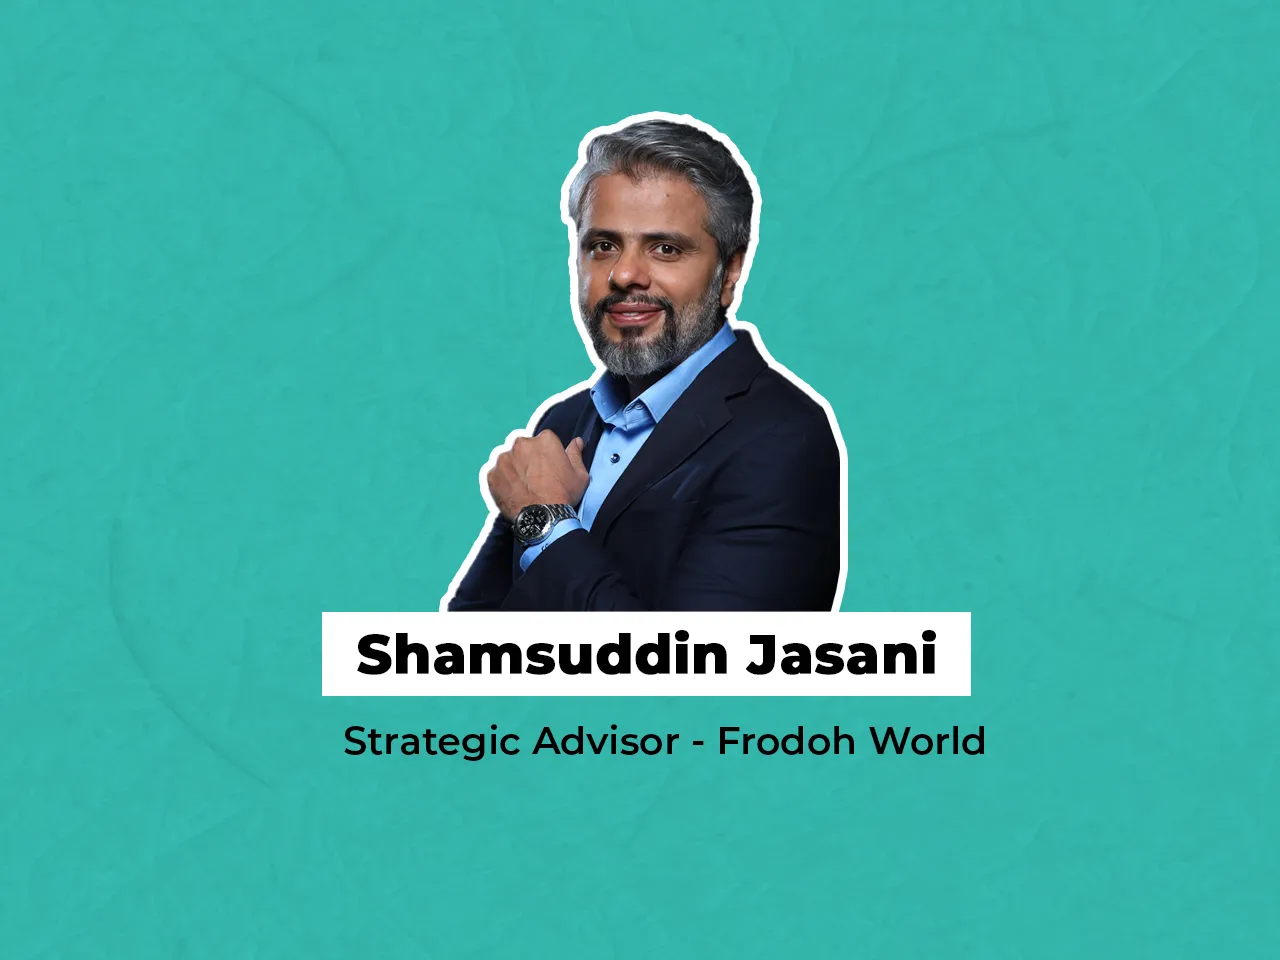 Frodoh World welcomes Shamsuddin Jasani as Strategic Advisor